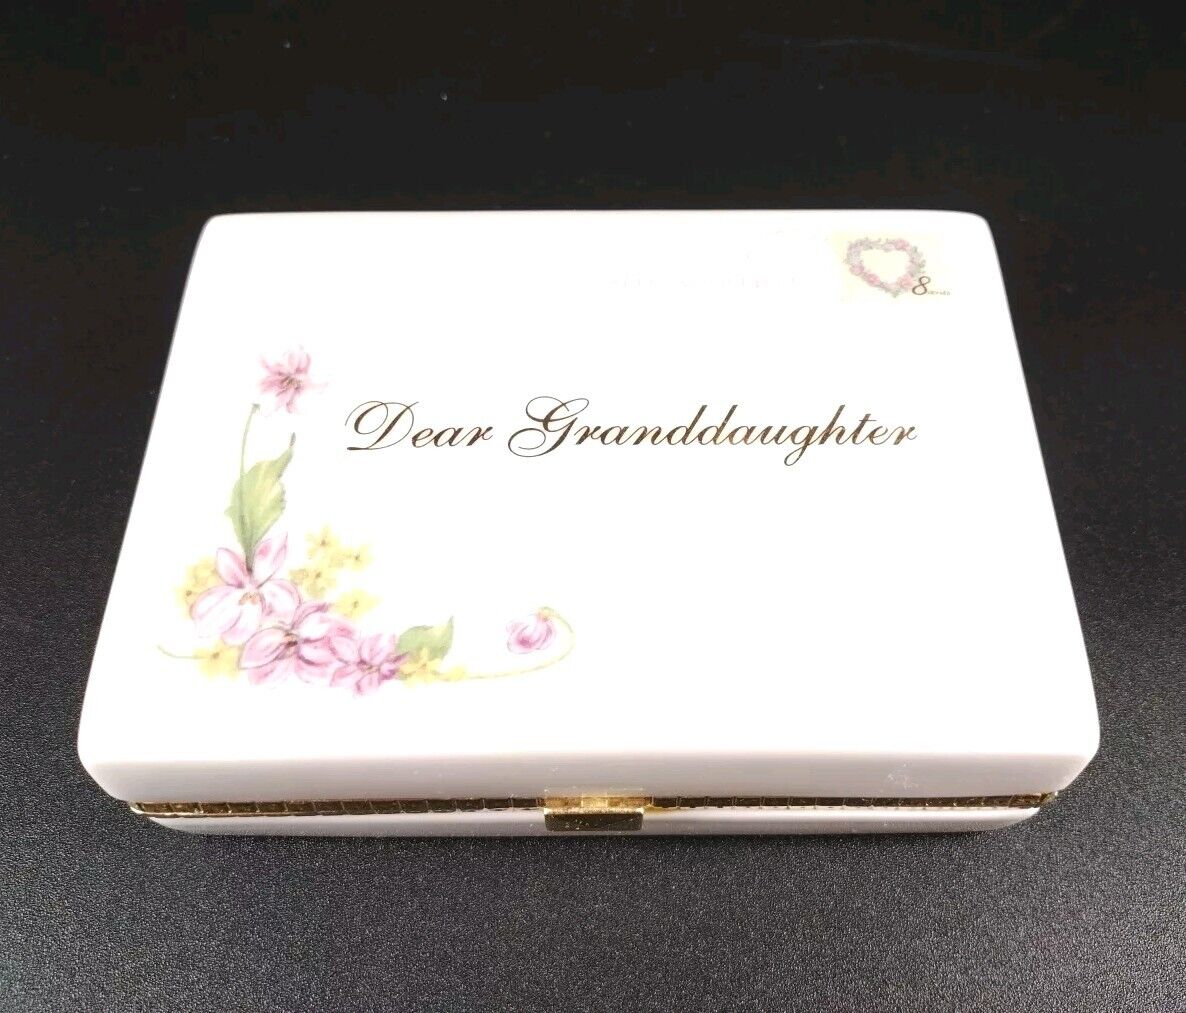 Ardleigh Elliott Porcelain Music Box “Dear Granddaughter” Ltd Edition Violets